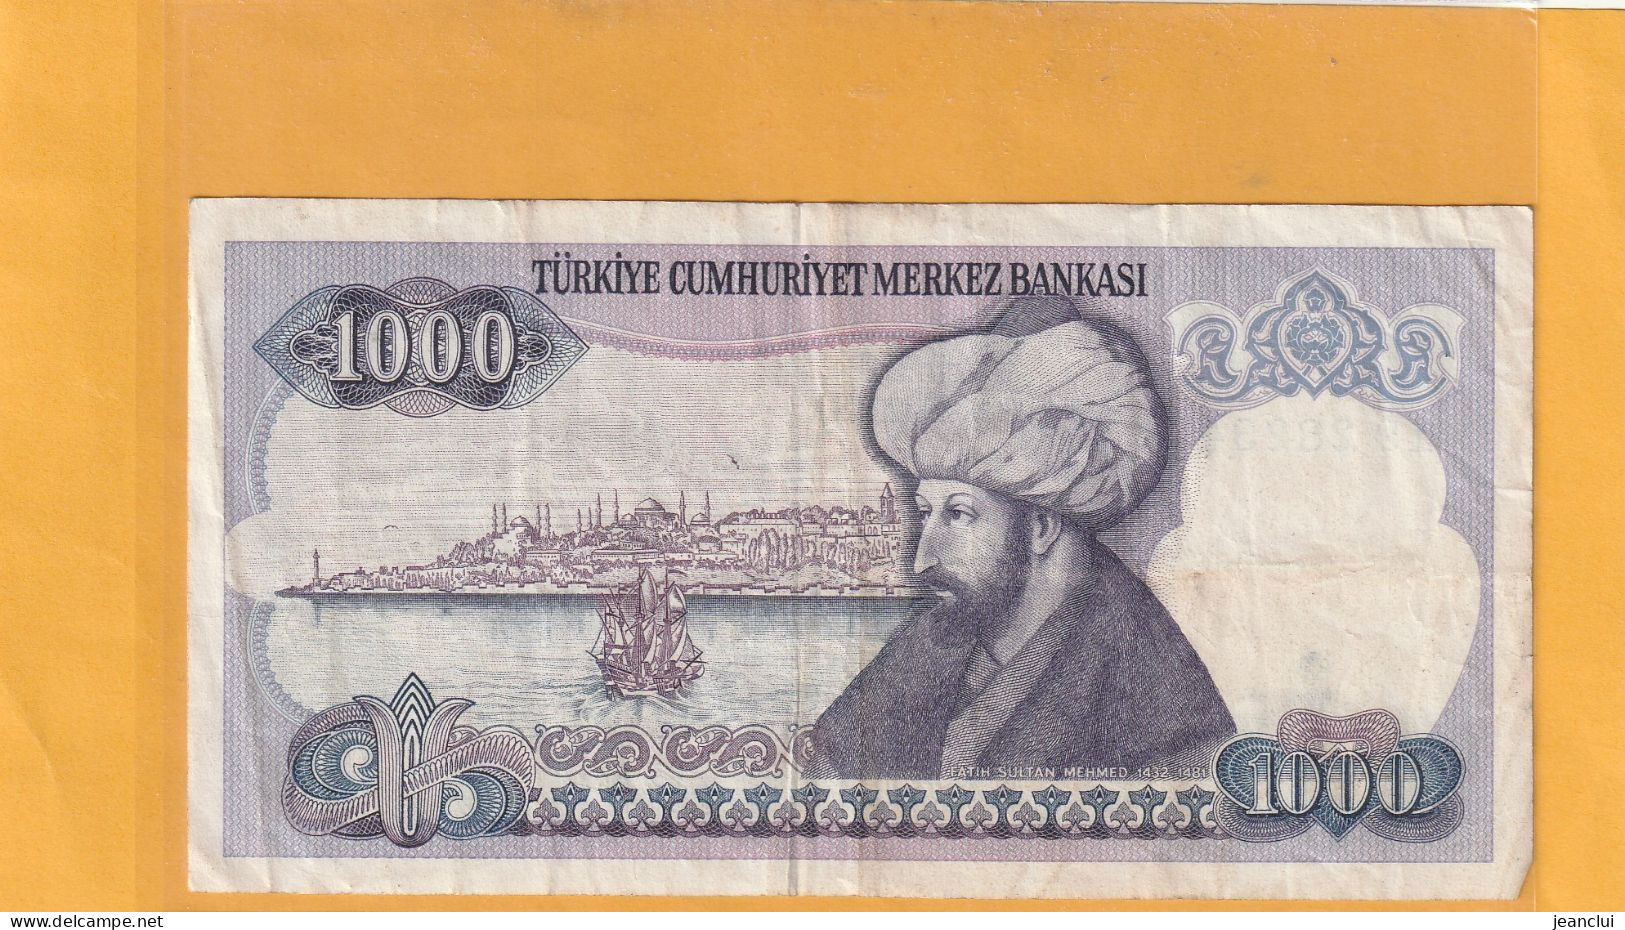 TURKIYE CUMHURIYET MERKEZ BANKASI . 1.000 LIRA . 14 OCAK 1970  . N°  A19 282347 .  2 SCANNES  .  BILLET USITE - Türkei